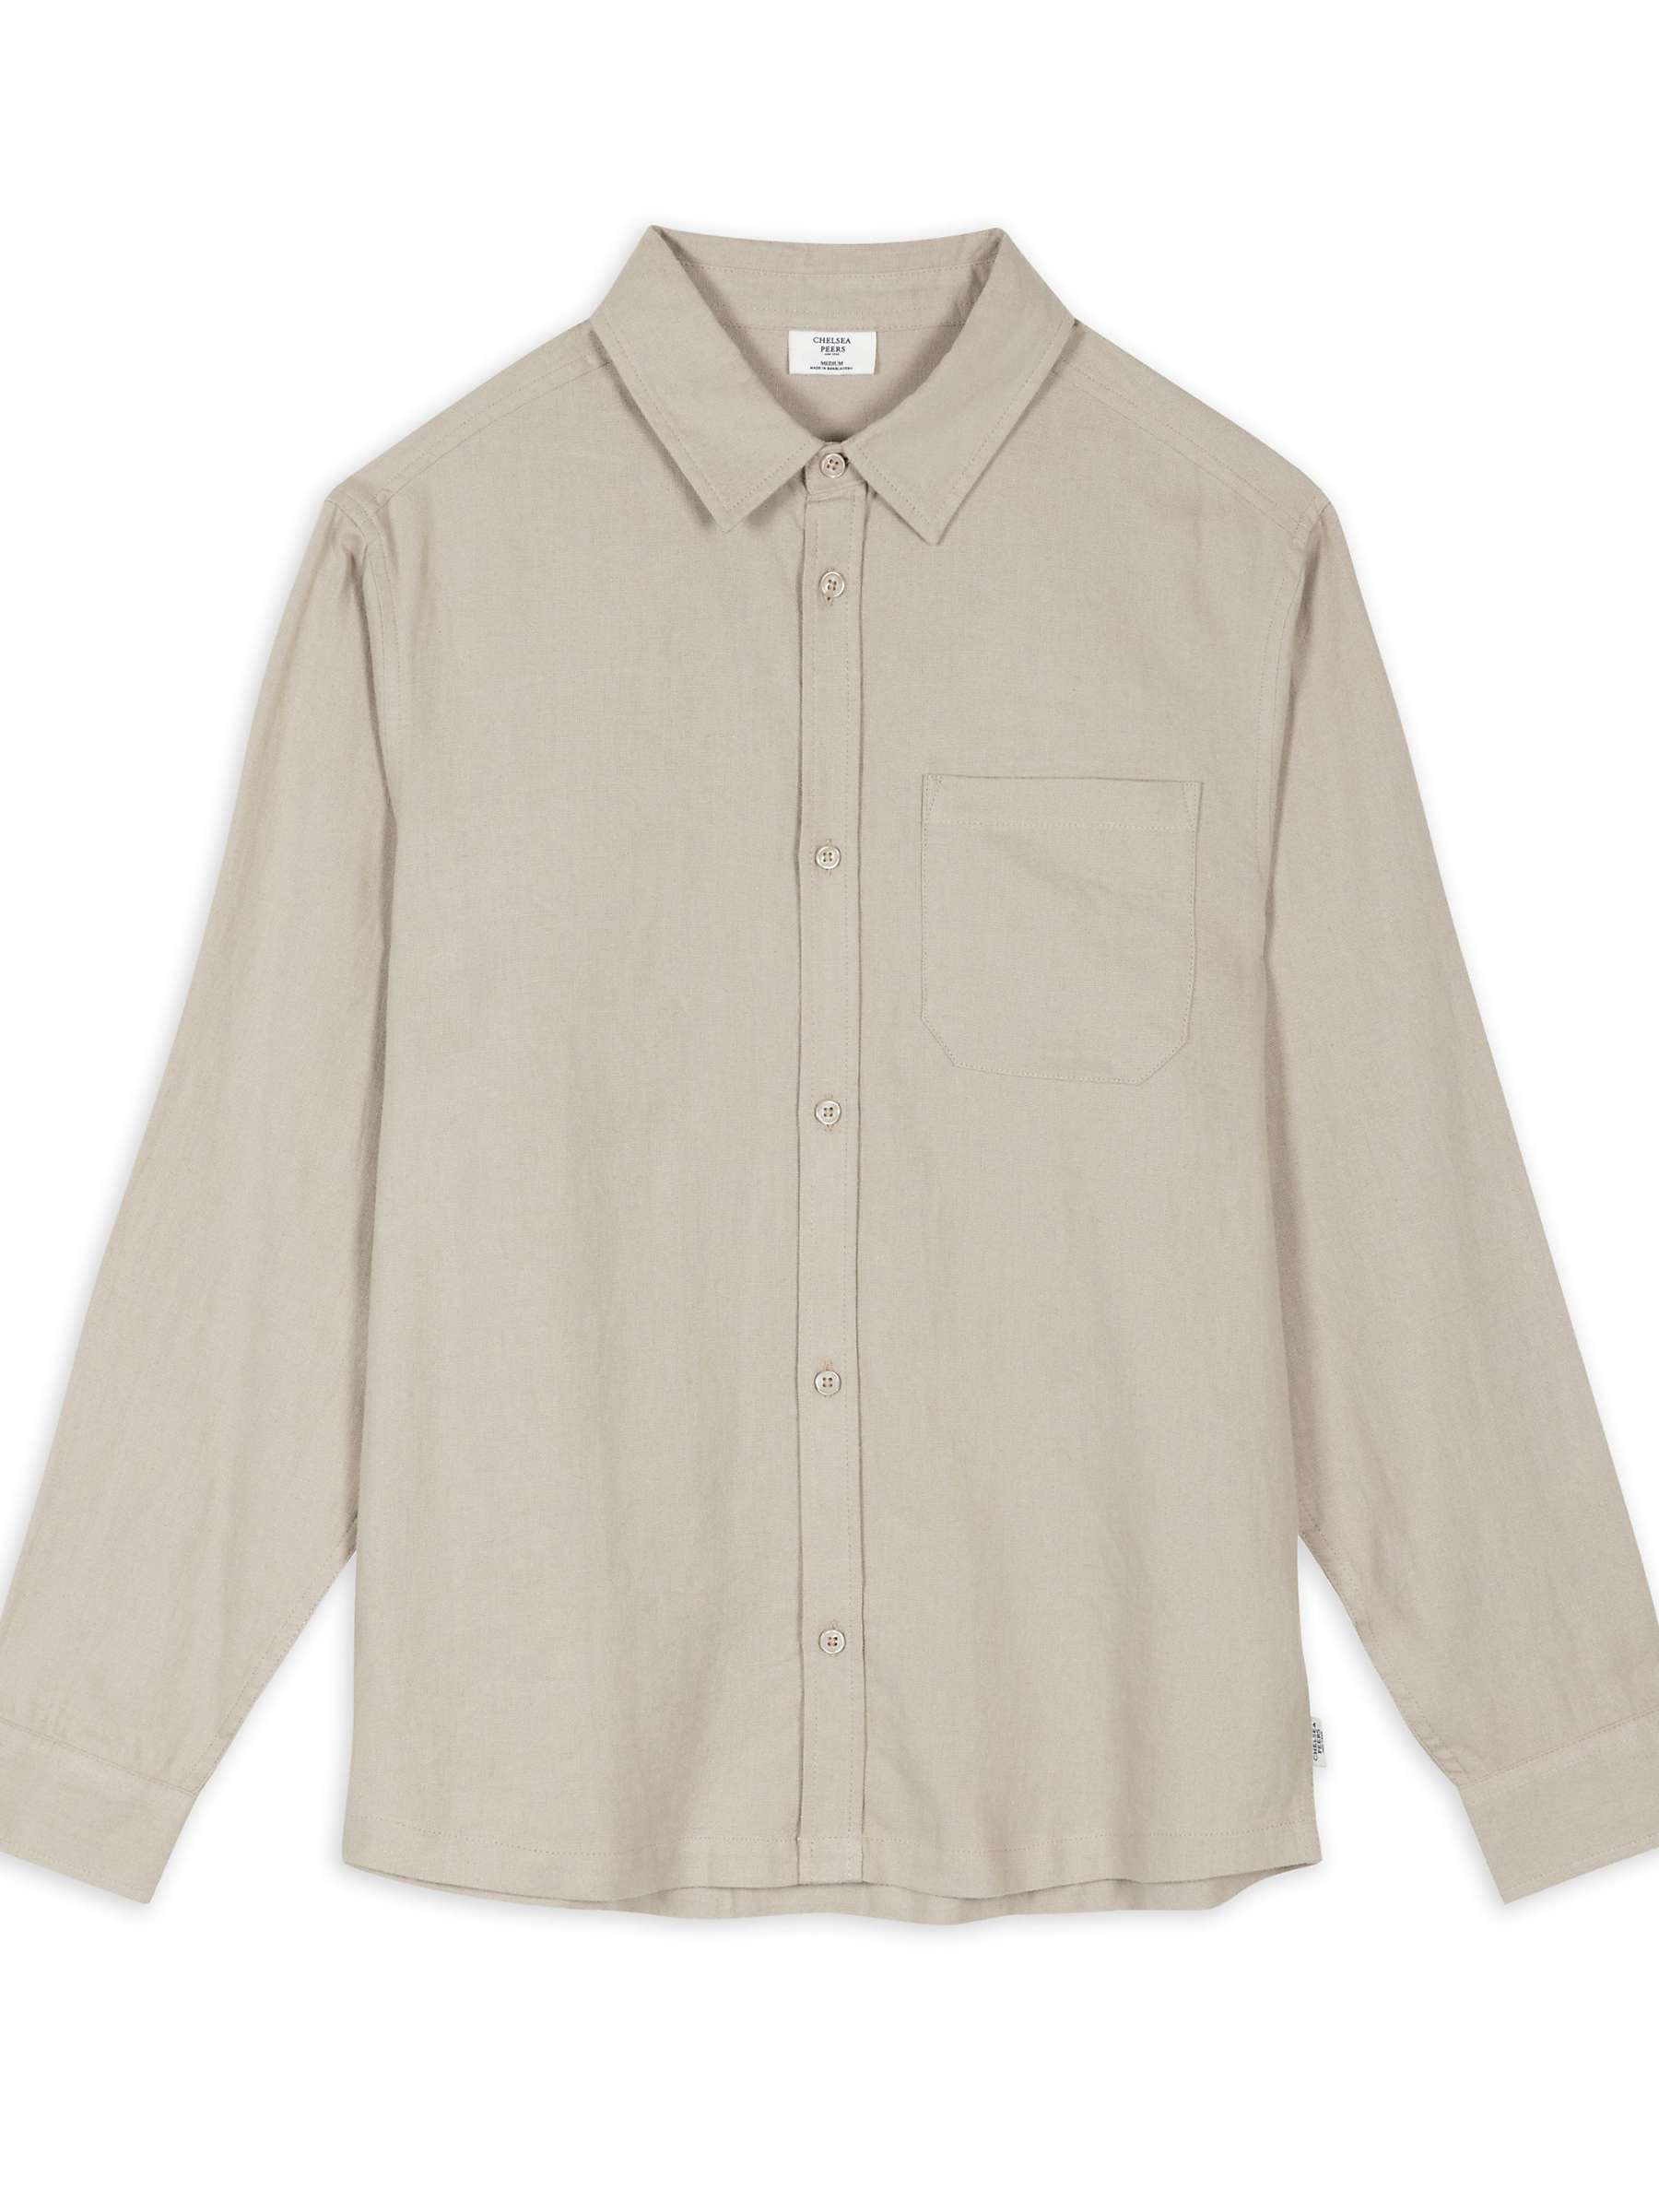 Buy Chelsea Peers Linen Blend Long Sleeve Shirt Online at johnlewis.com